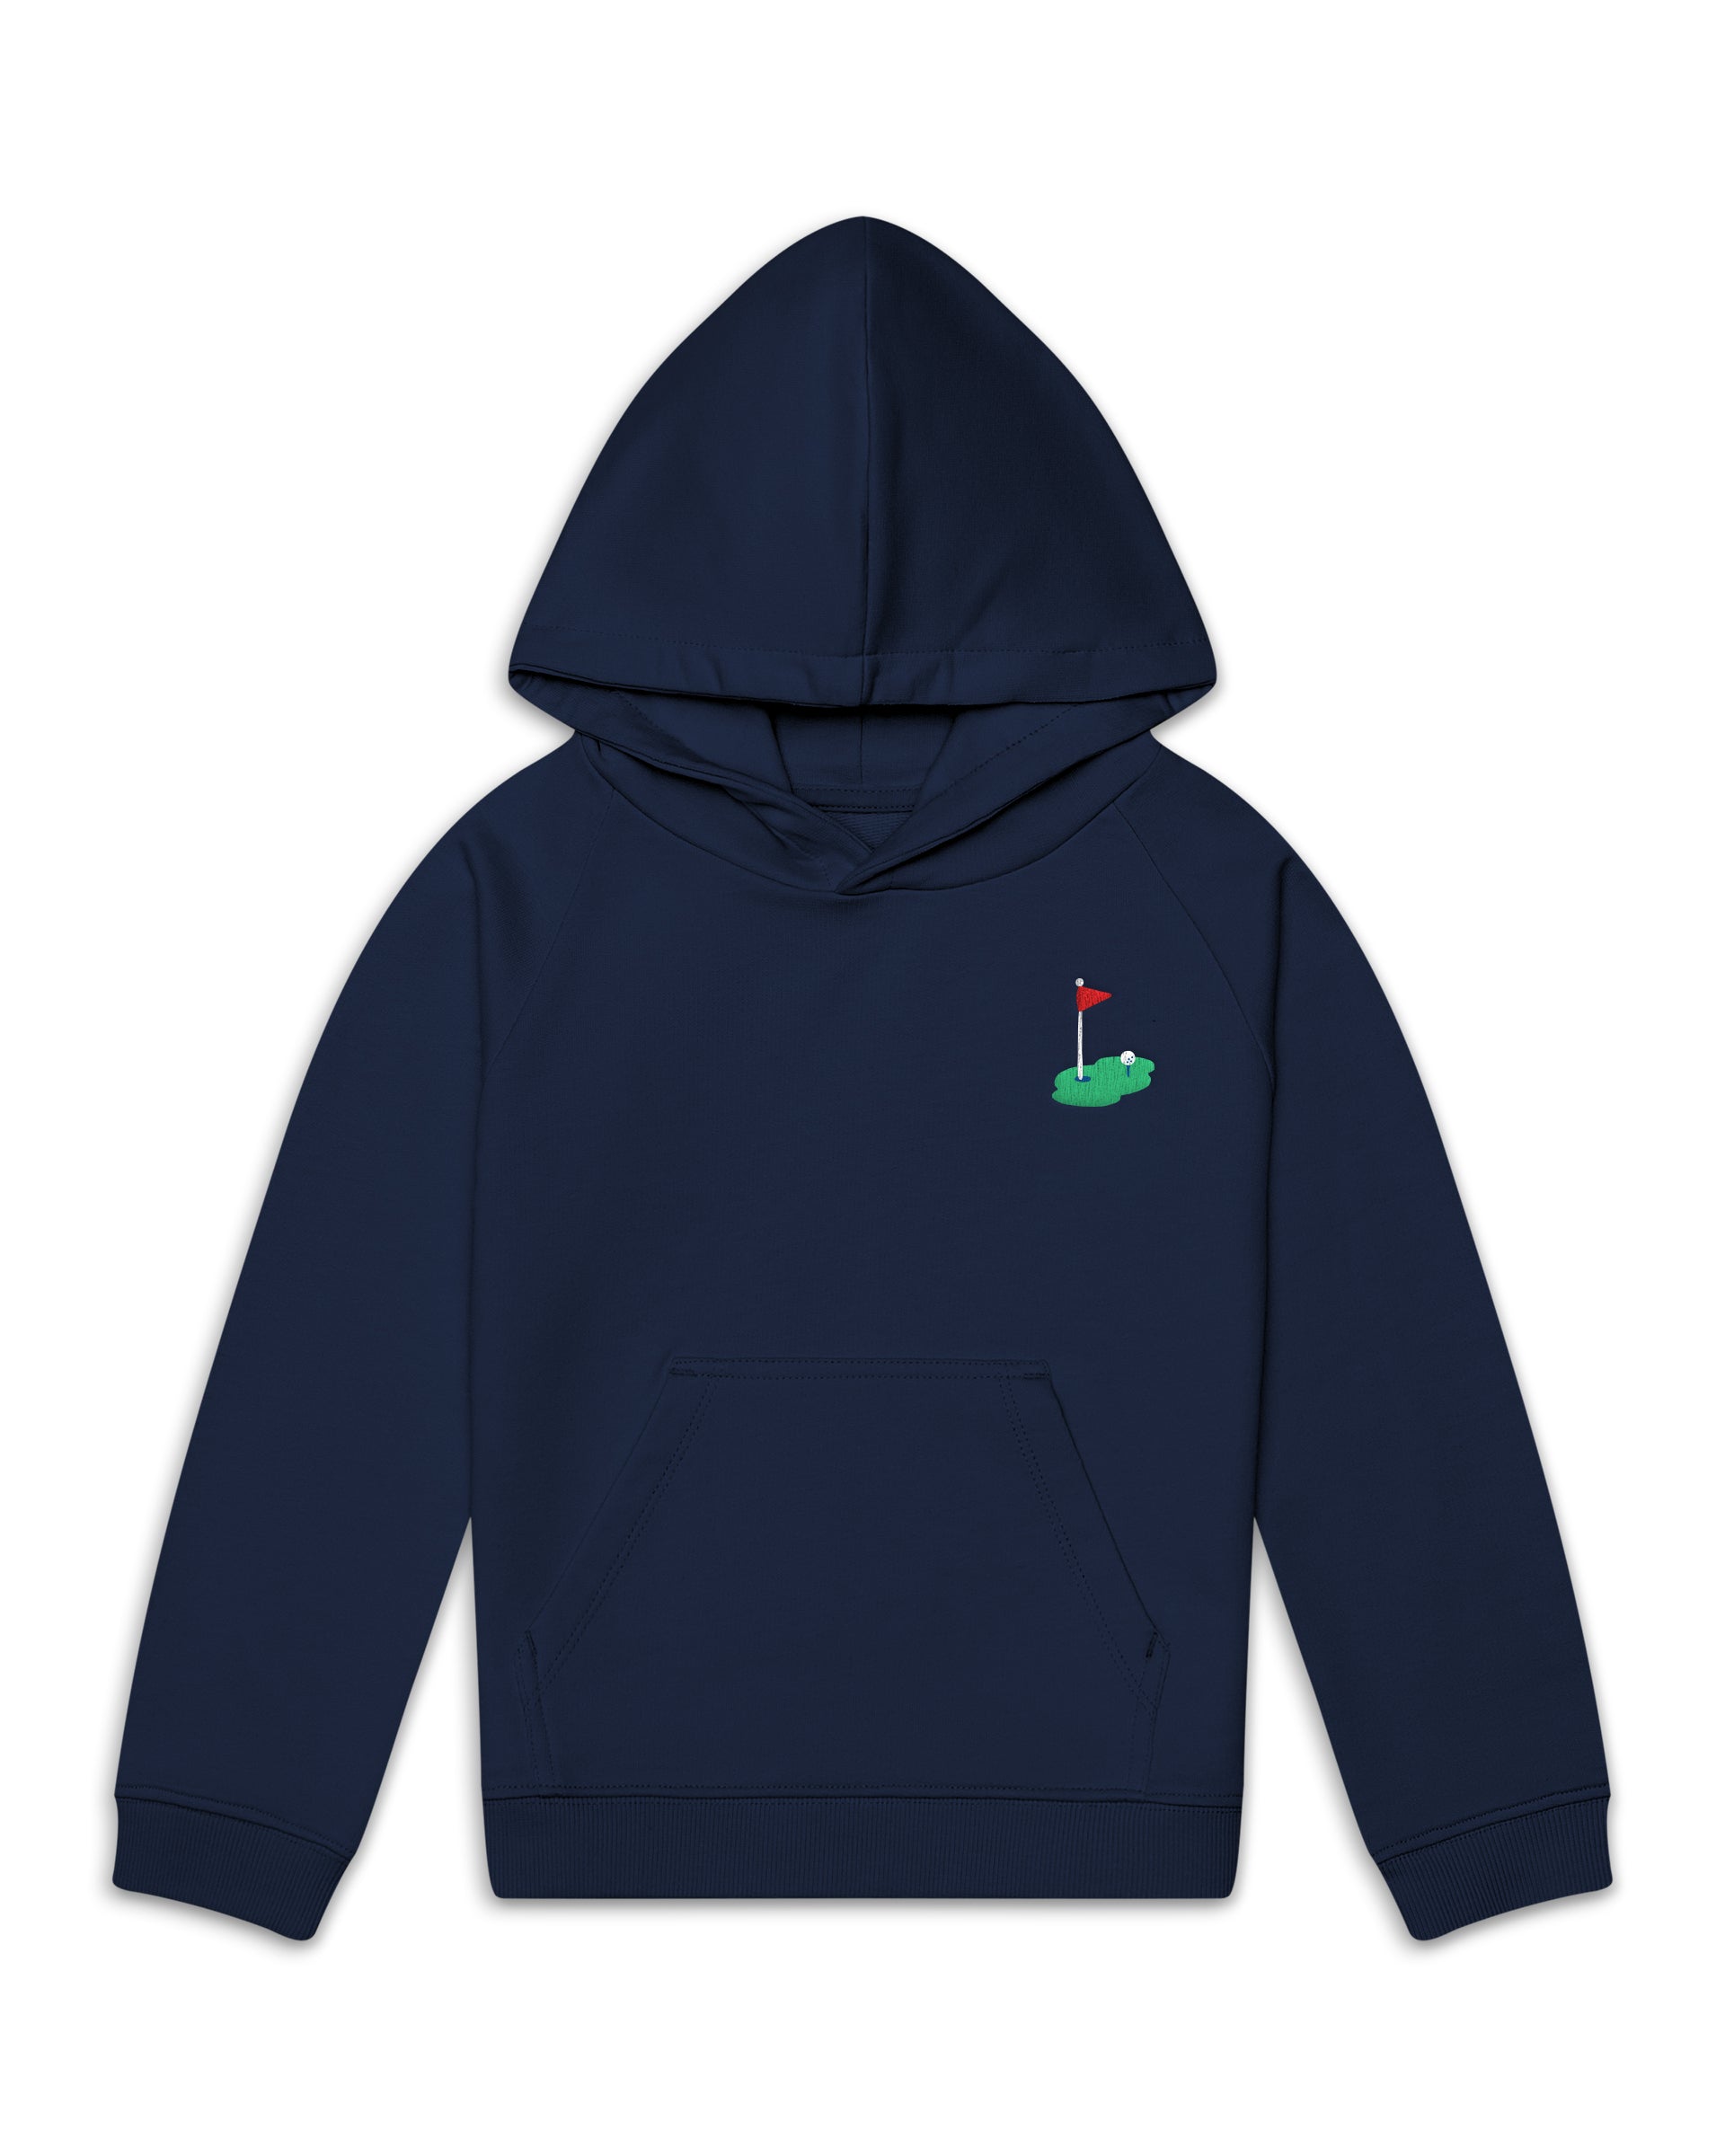 The Organic Embroidered Hoodie Sweatshirt [Navy Golf]